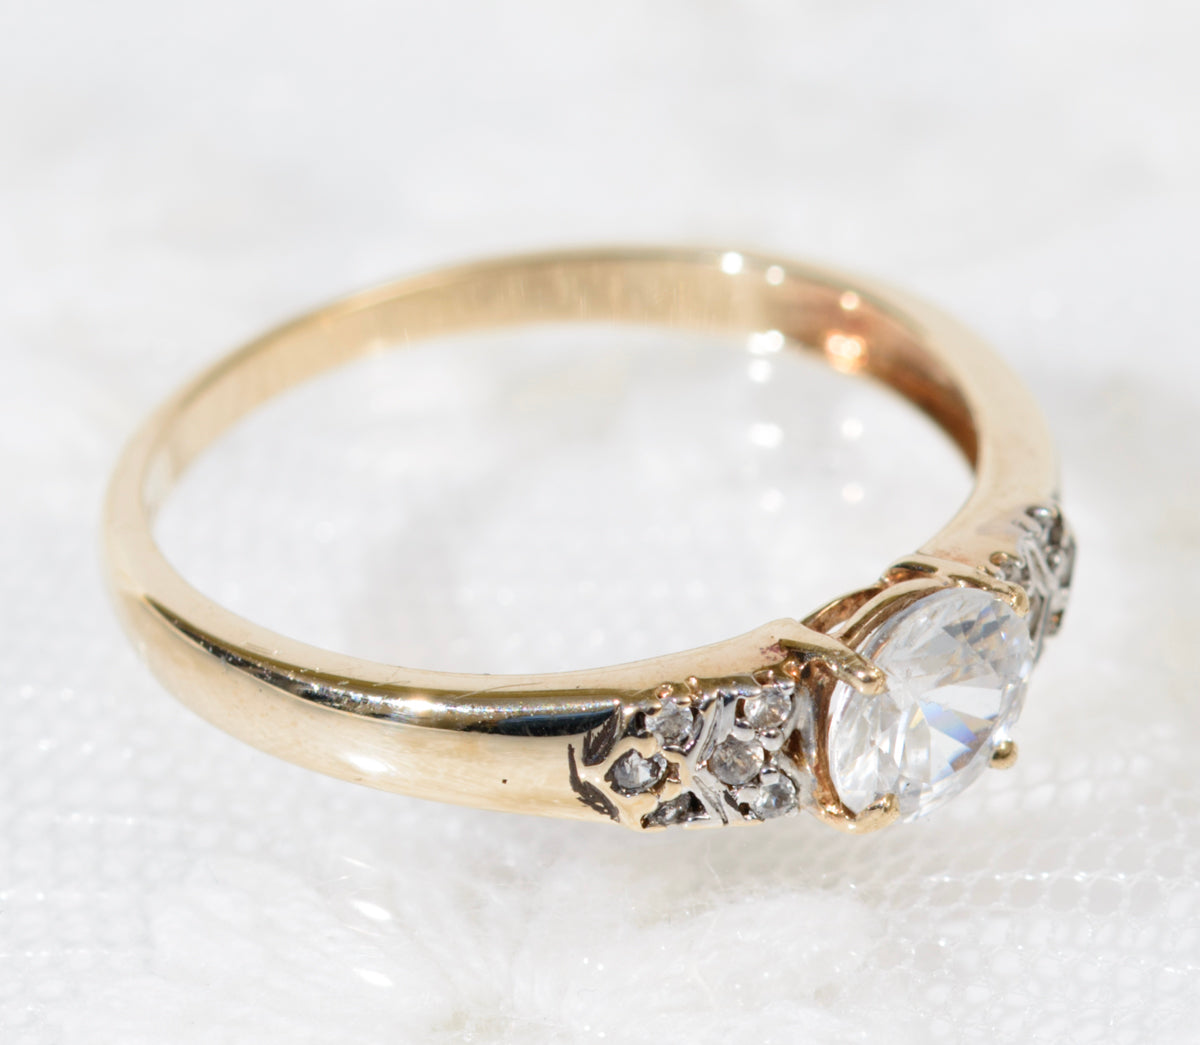 9ct Gold Solitaire Ring With Accents White Zircon Gemstones Birmingham Hallmark (A1913)